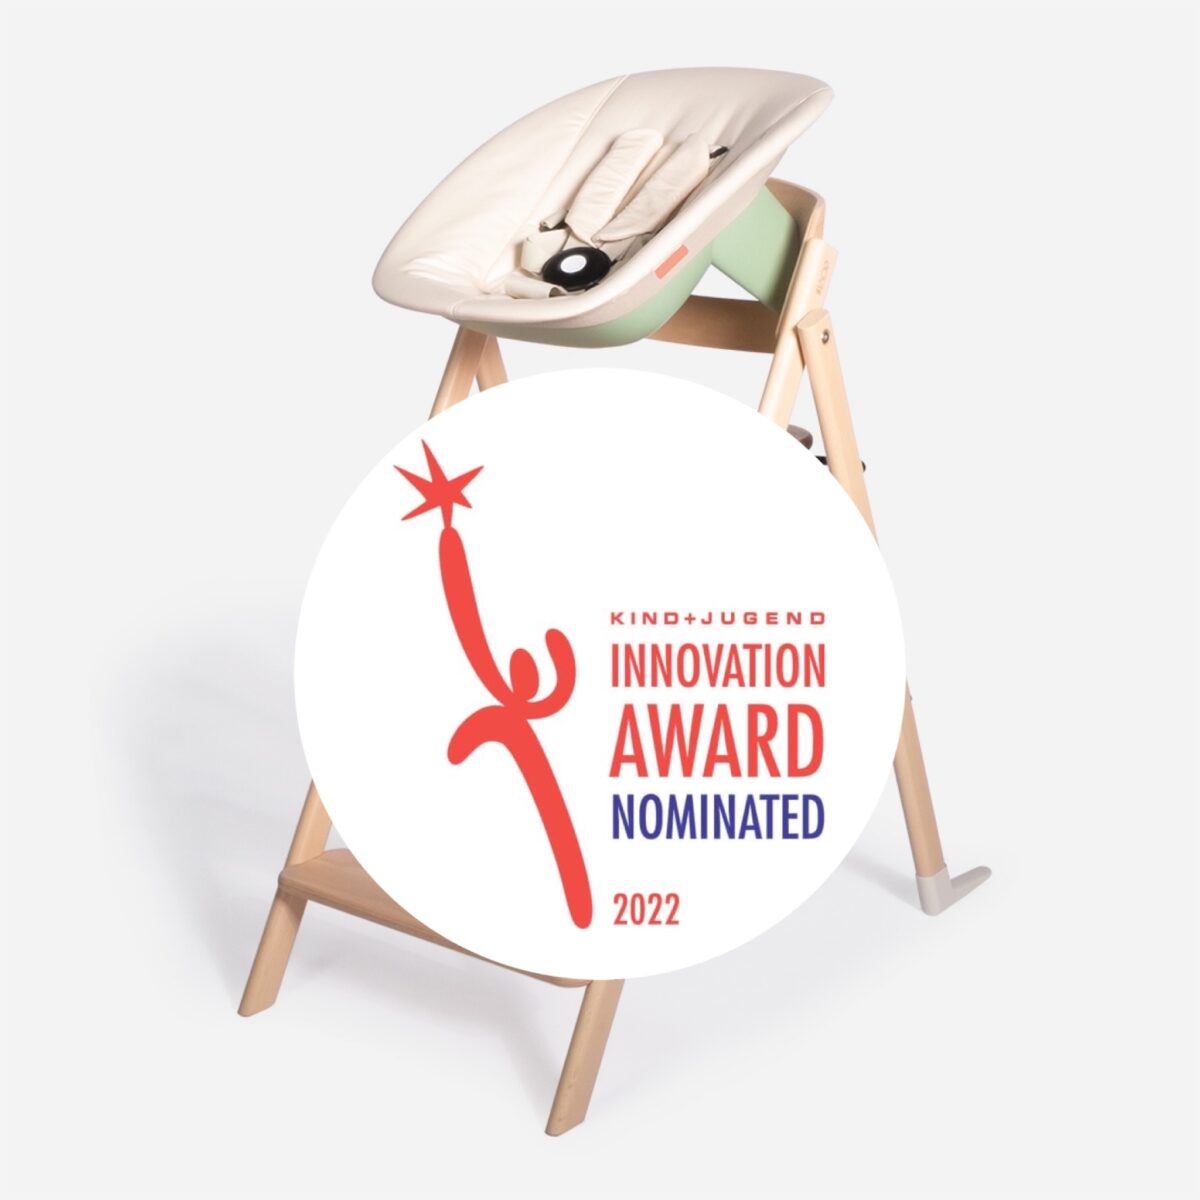 KAOS innovation award nominee kind und jugend